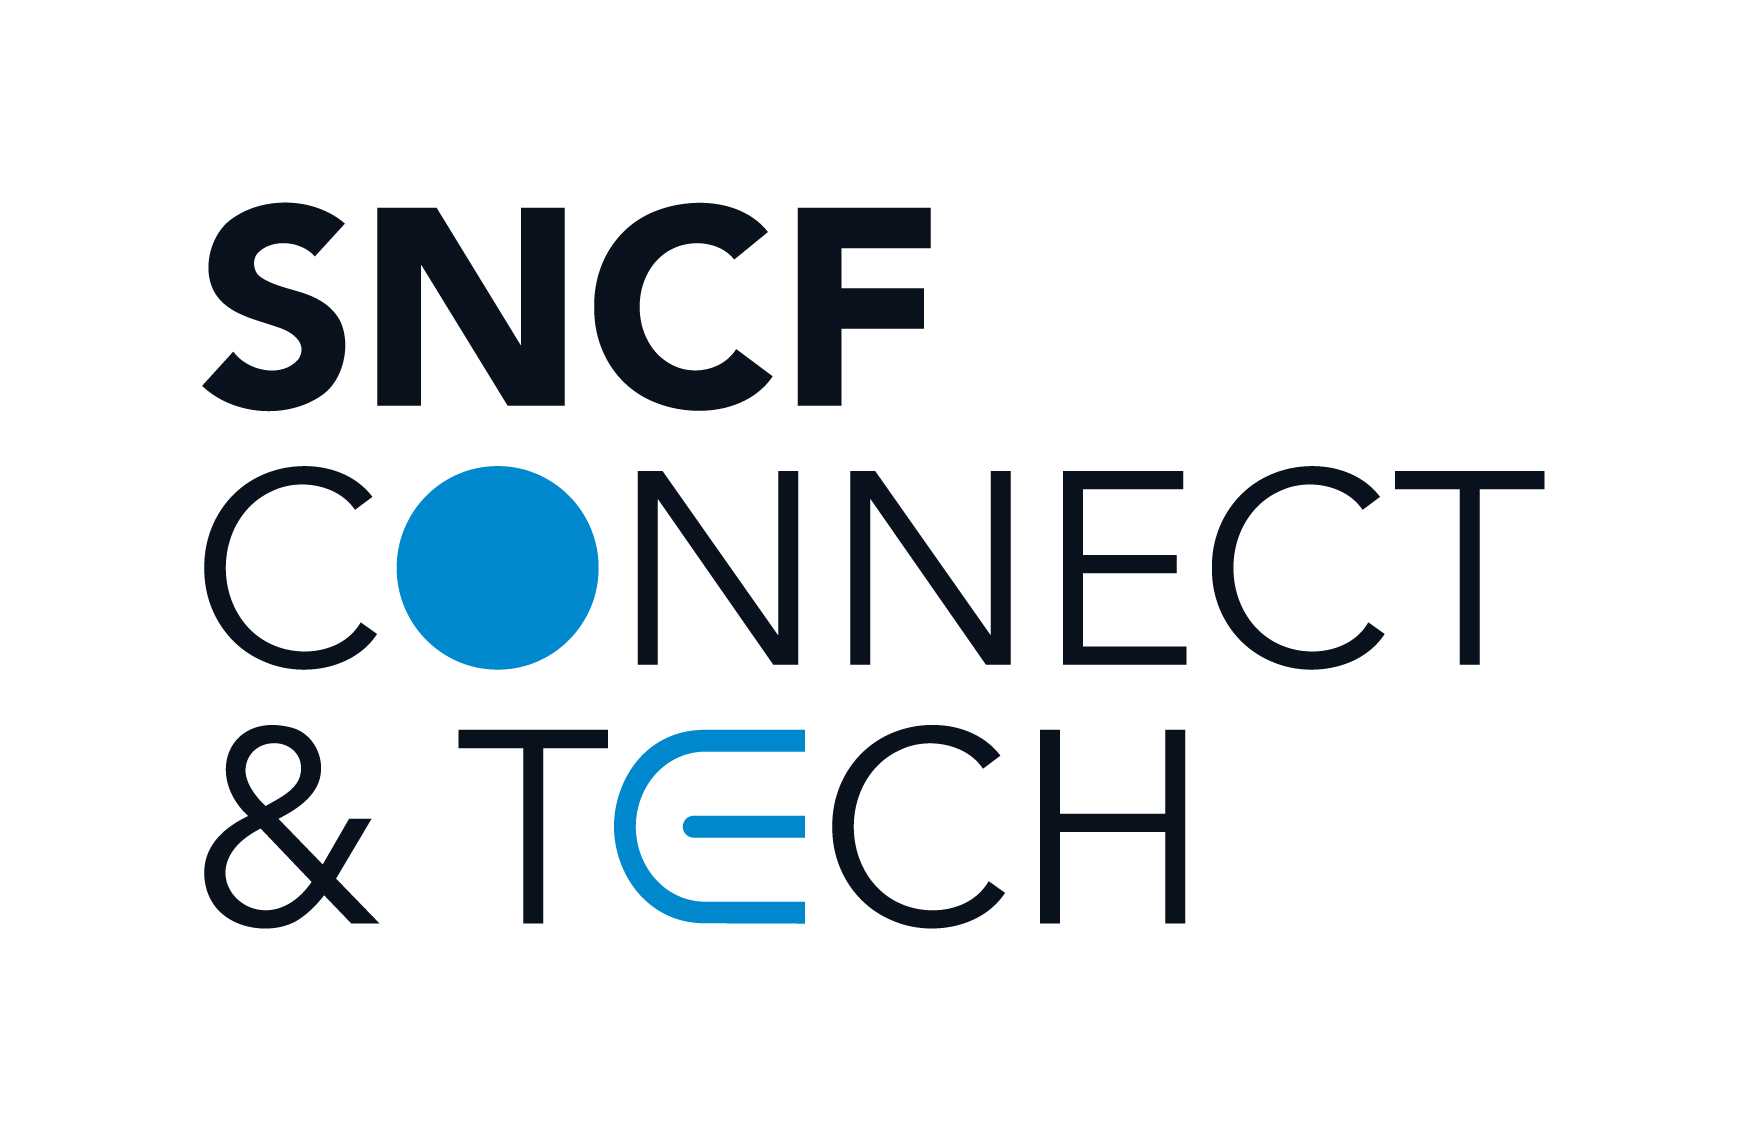 Logo SNCF Connect & Tech